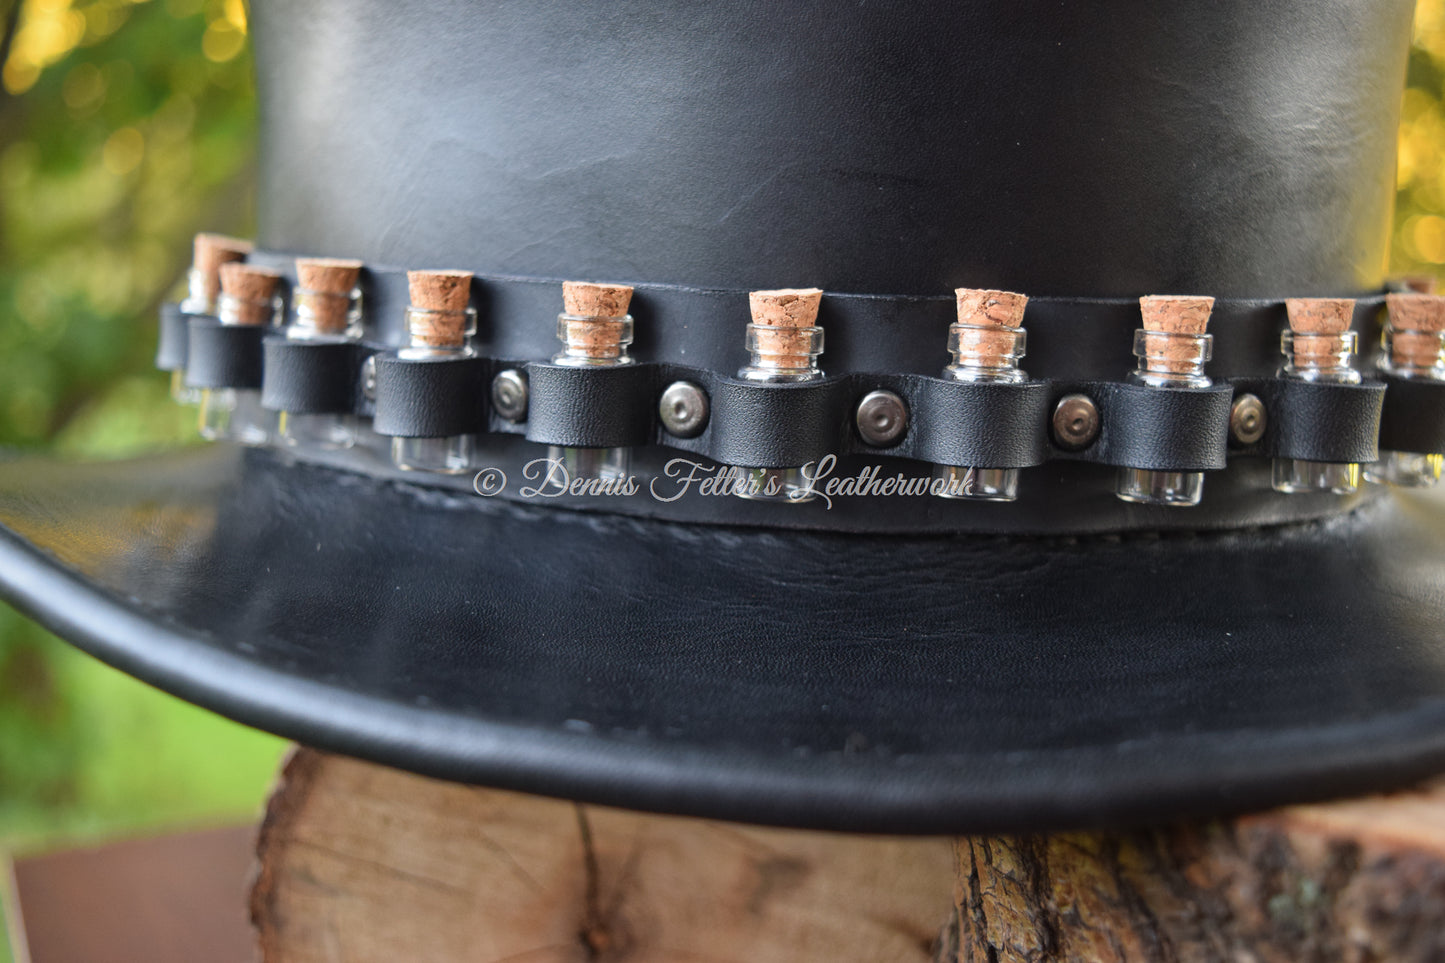 black leather alchemist / plague doctor hat - front view shot across the brim of the hat